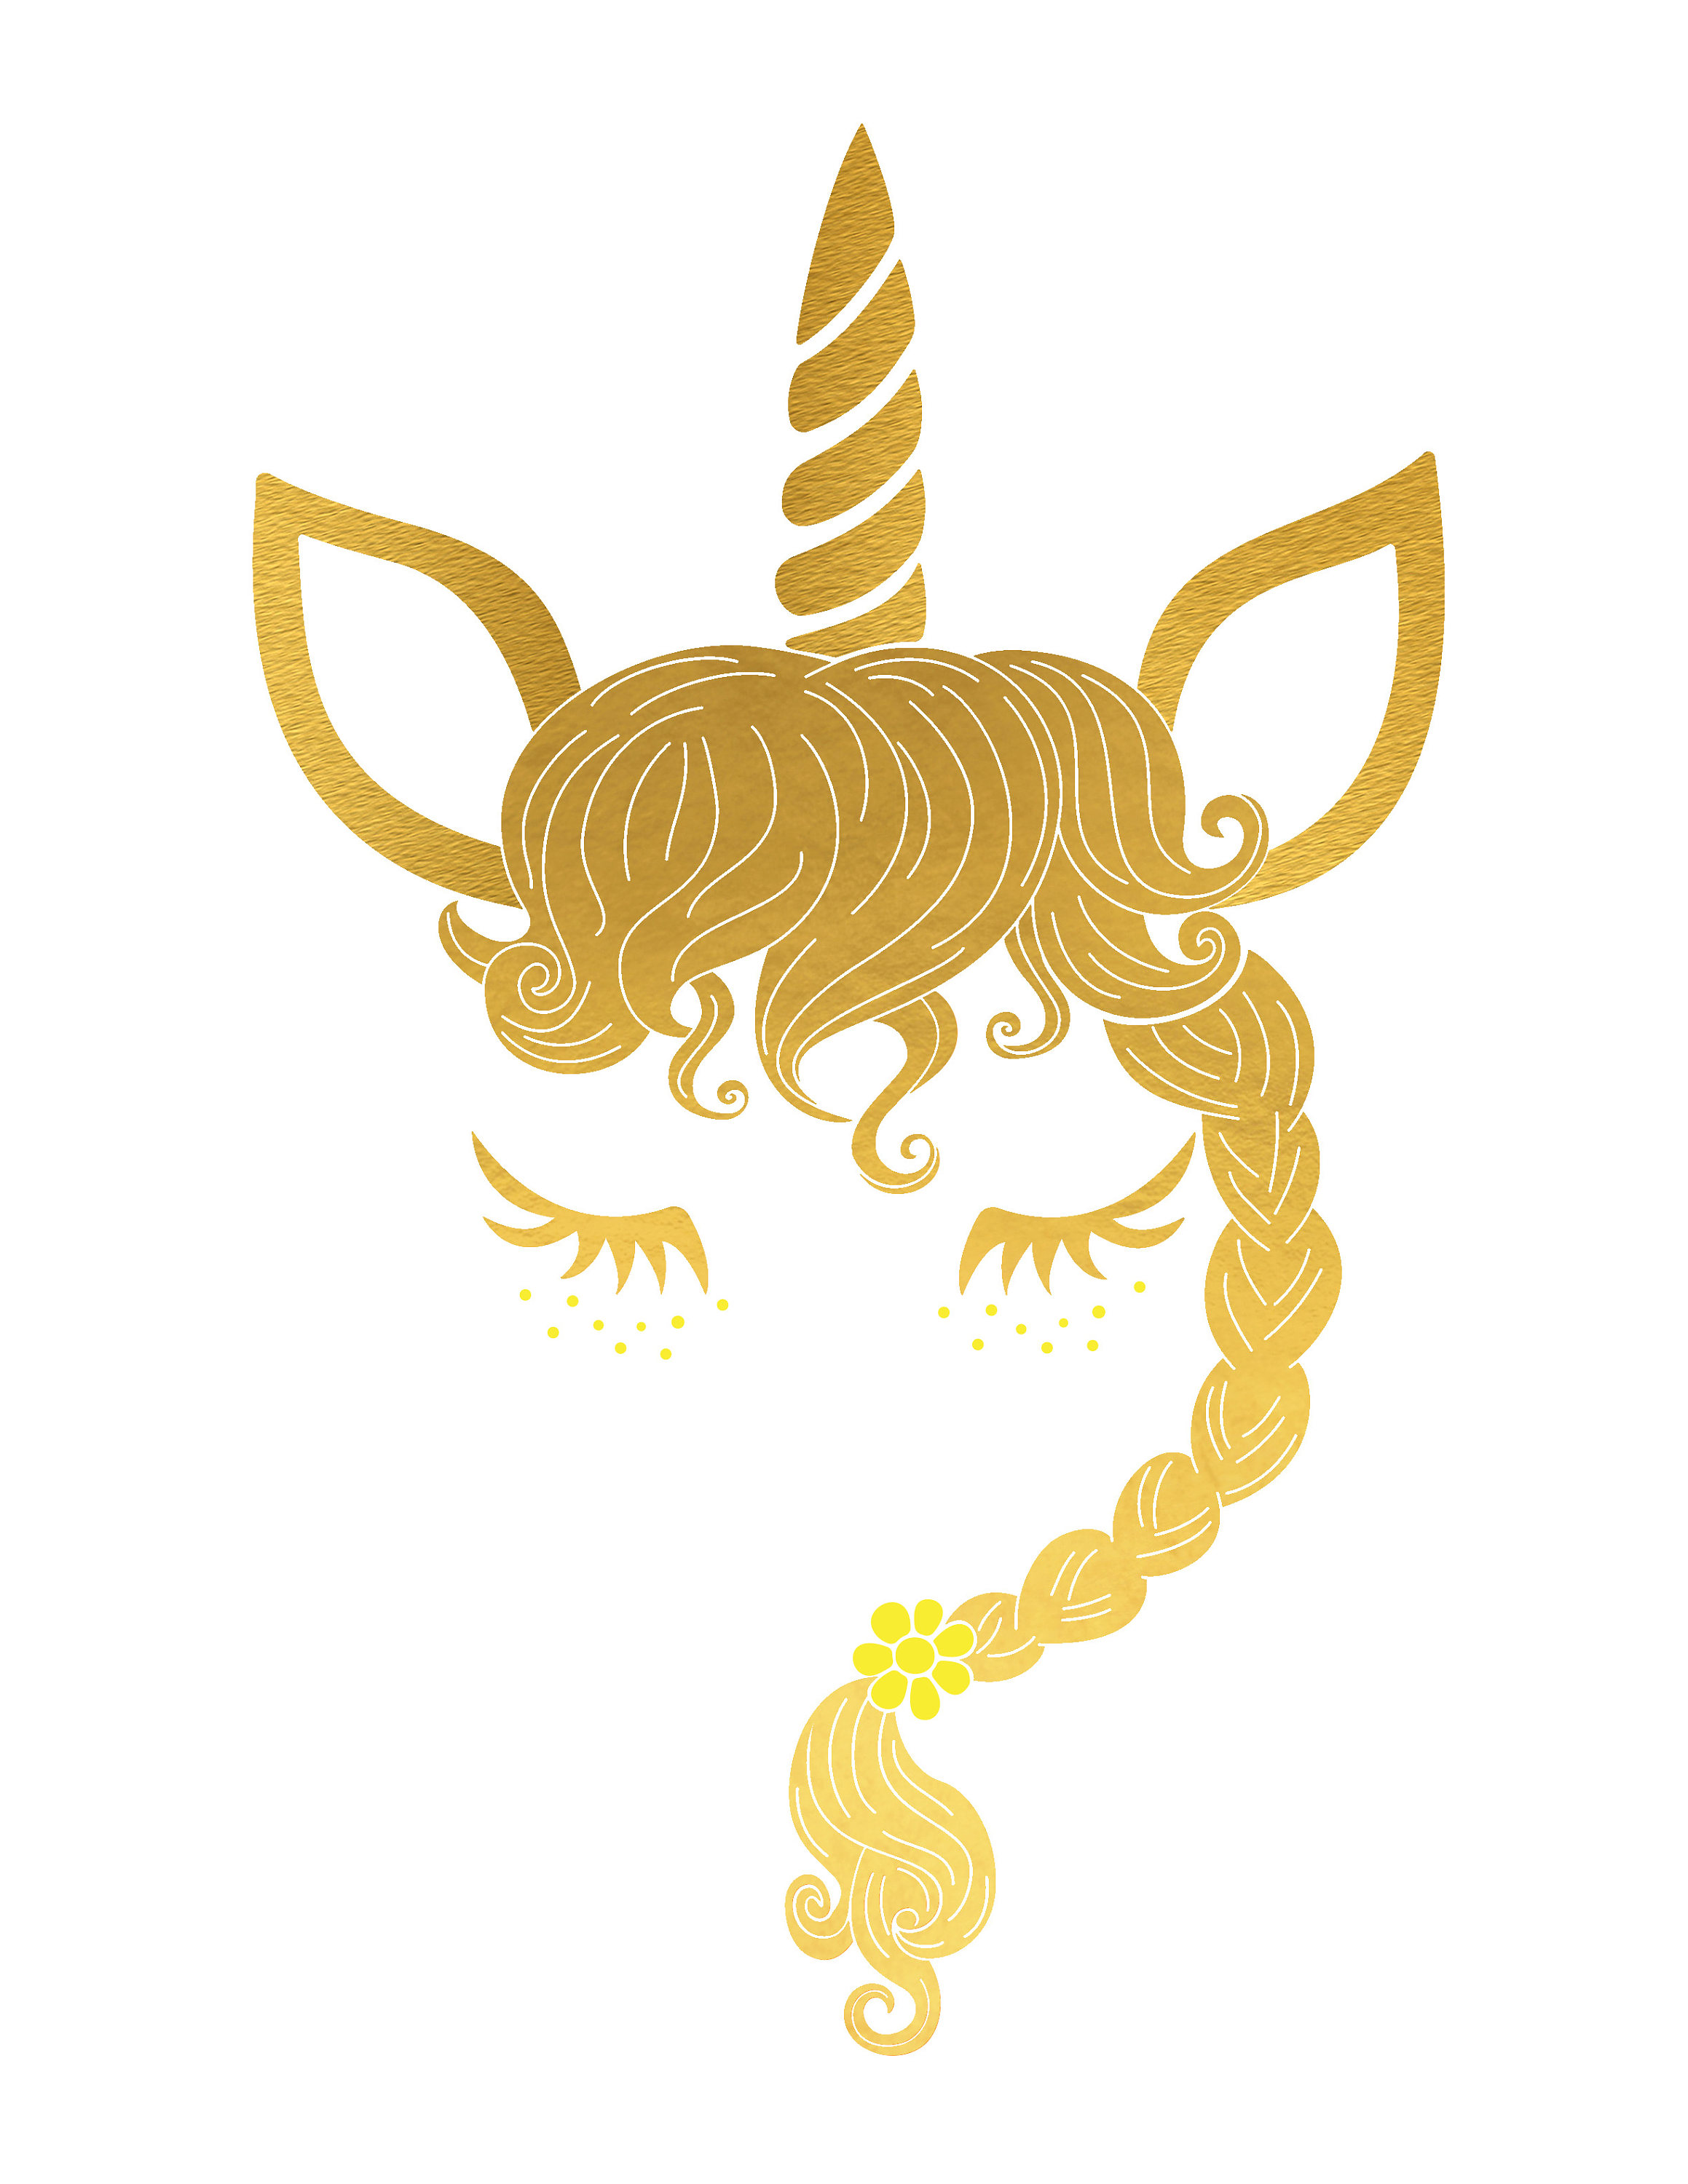 clipart unicorn fairy